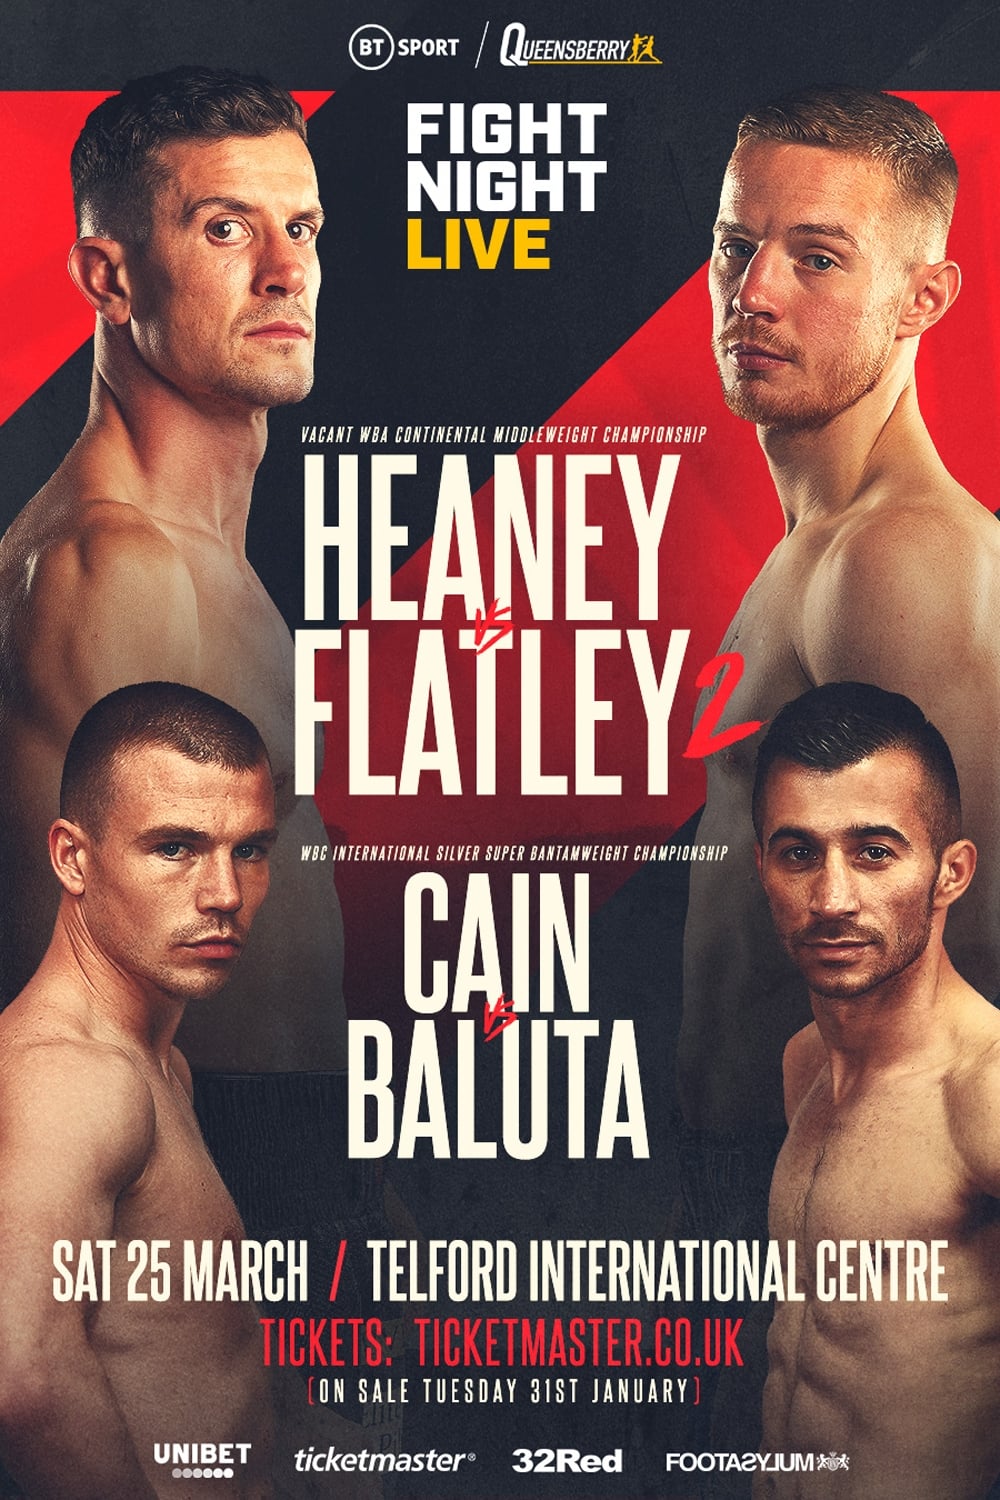 Nathan Heaney vs. Jack Flatley II